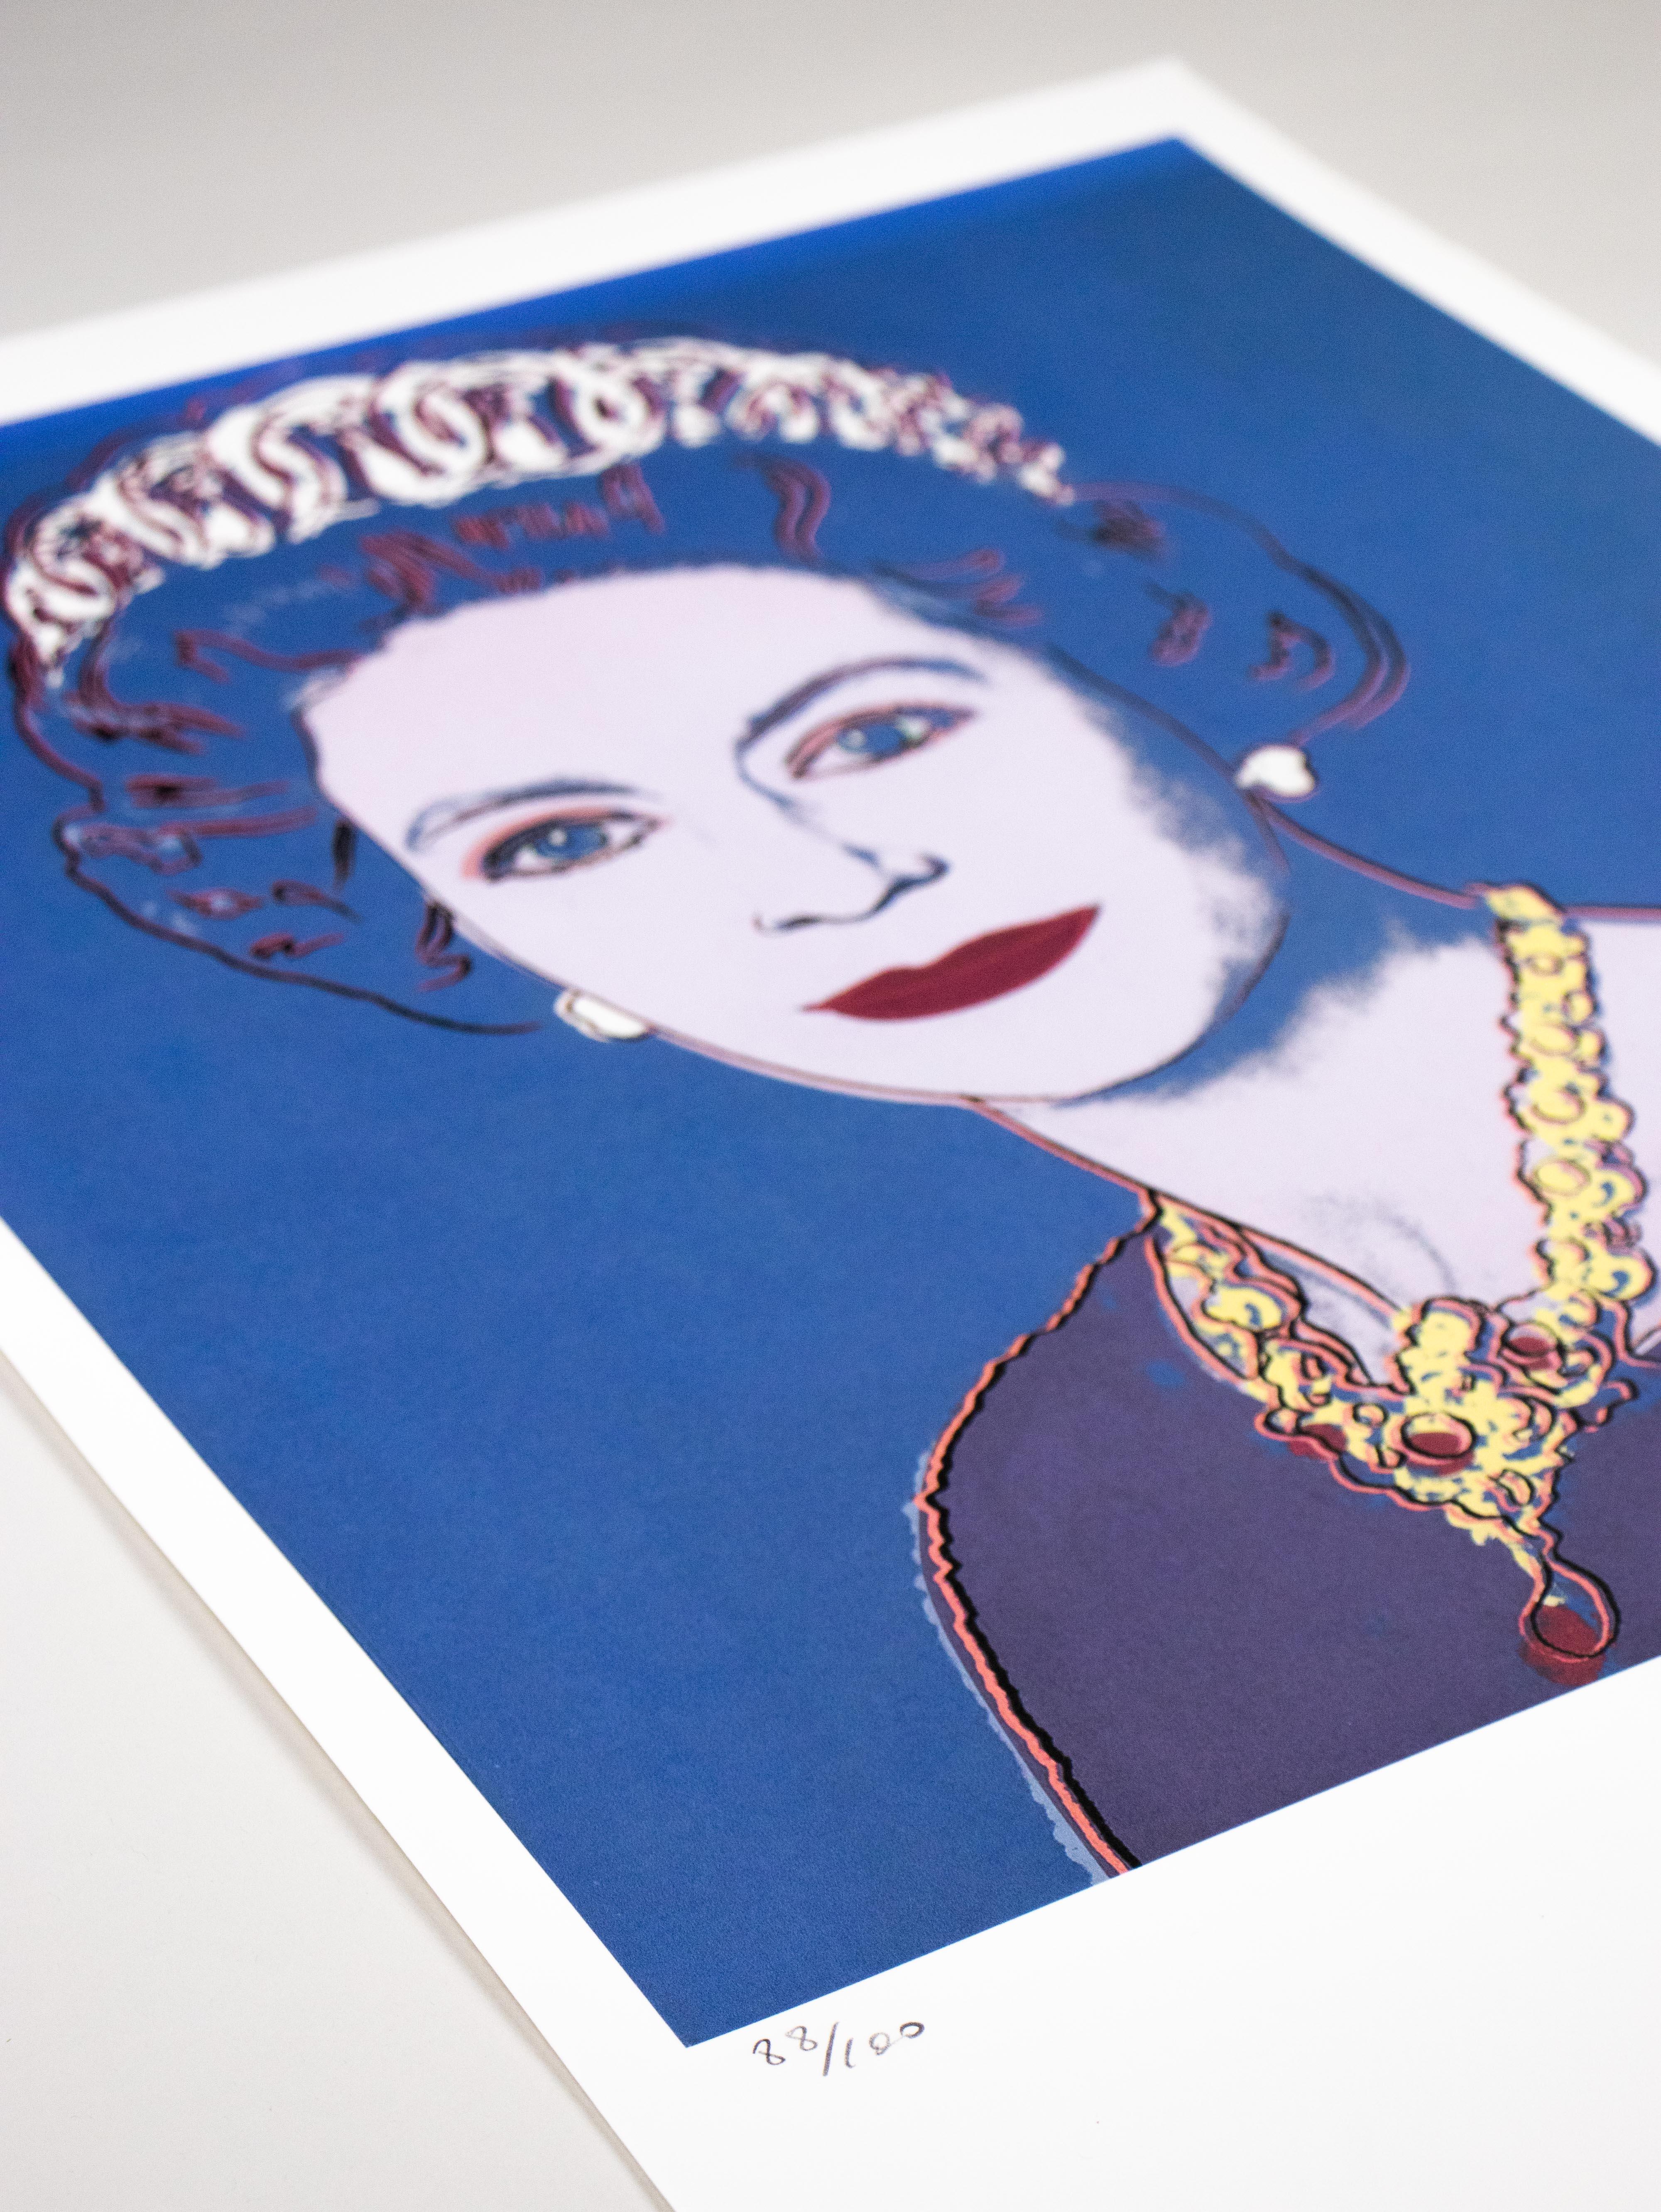 Queen Elizabeth II - 1983 - Original Lithograph - Limited Edition Print - 88/100 4